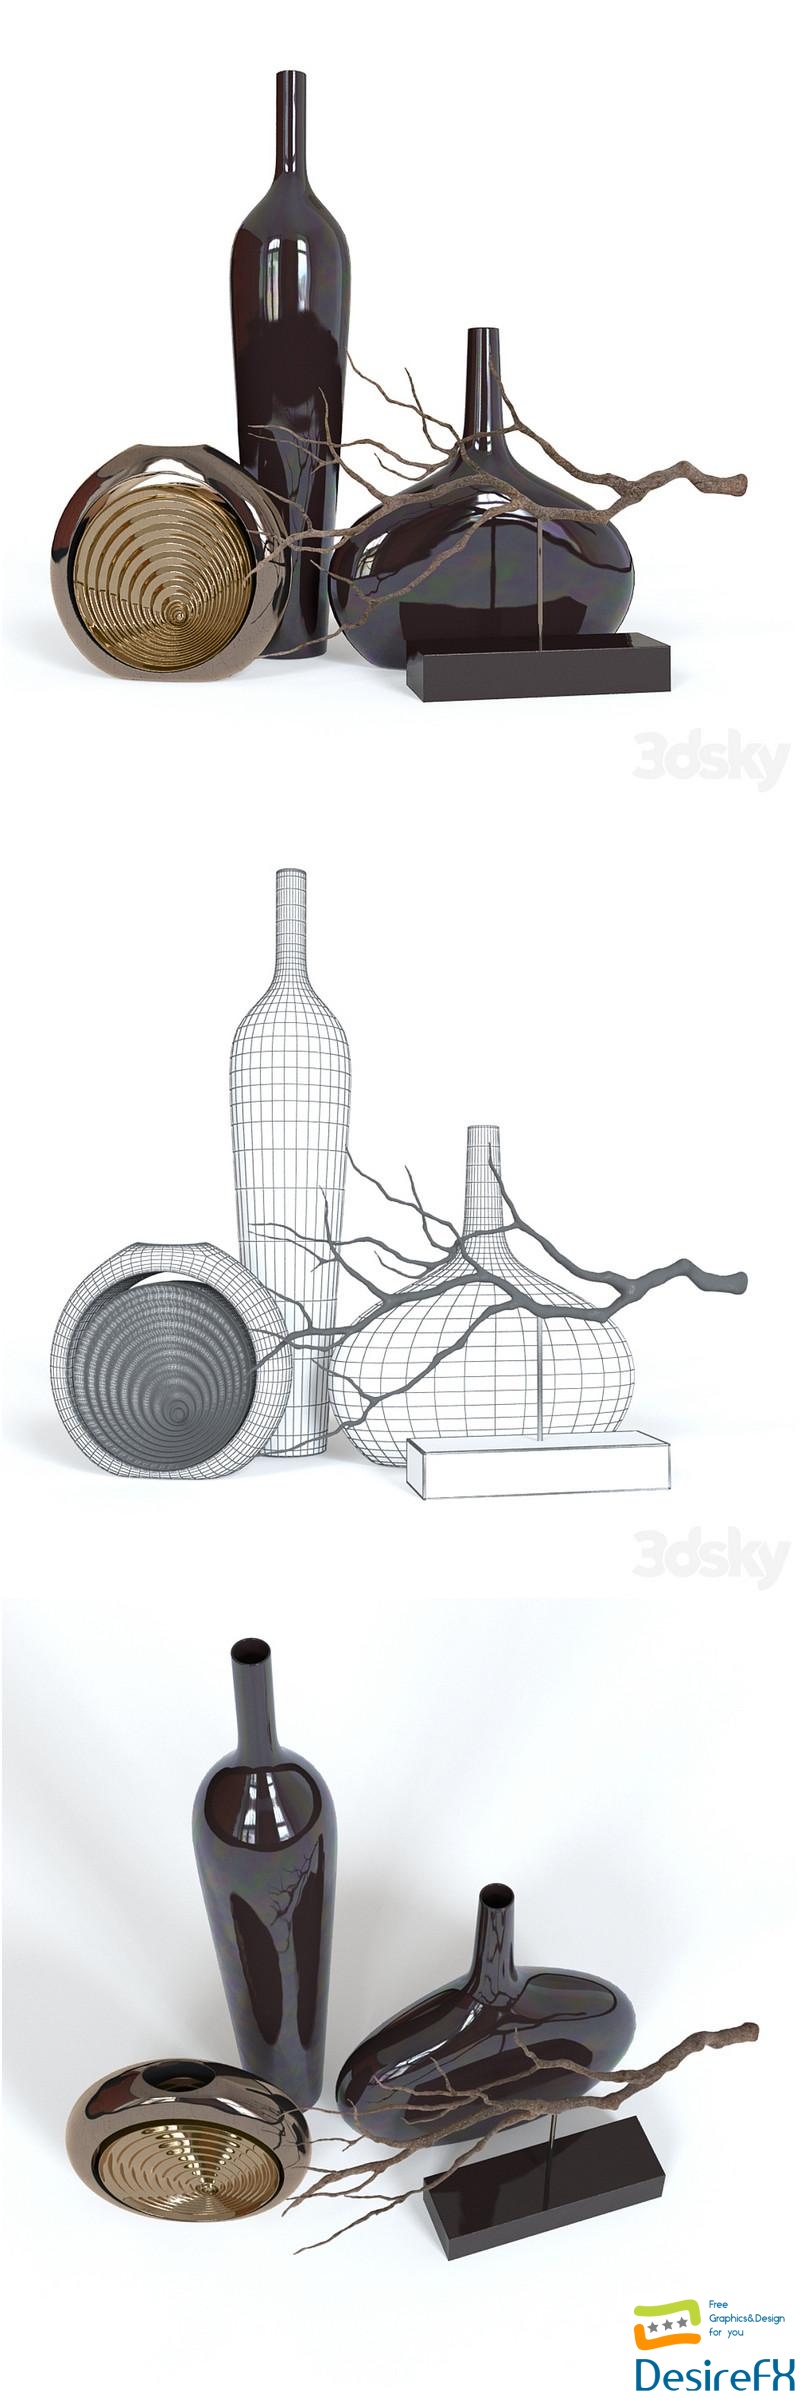 Decorative Set 2 (3 vases and line) 3D Model